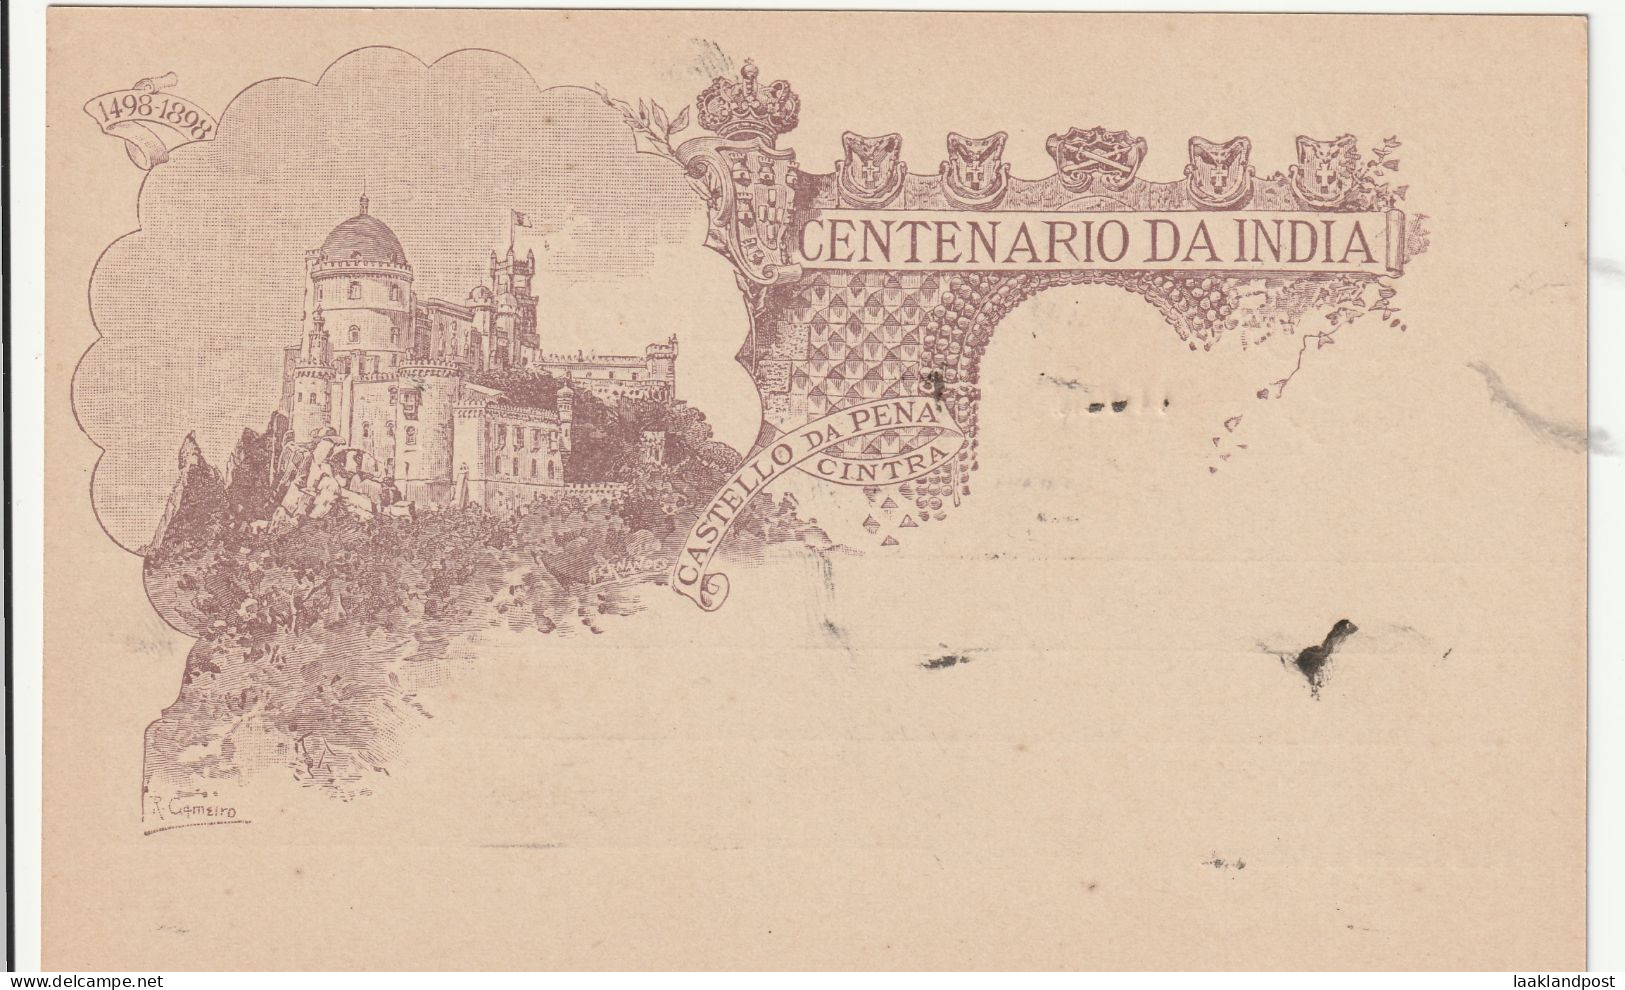 Portugiesisch Afrika 1898 Illustrated Postcard, 20 Reis, Vasco Da Gama, "Castello Da Pena Centra "unused - Africa Portuguesa